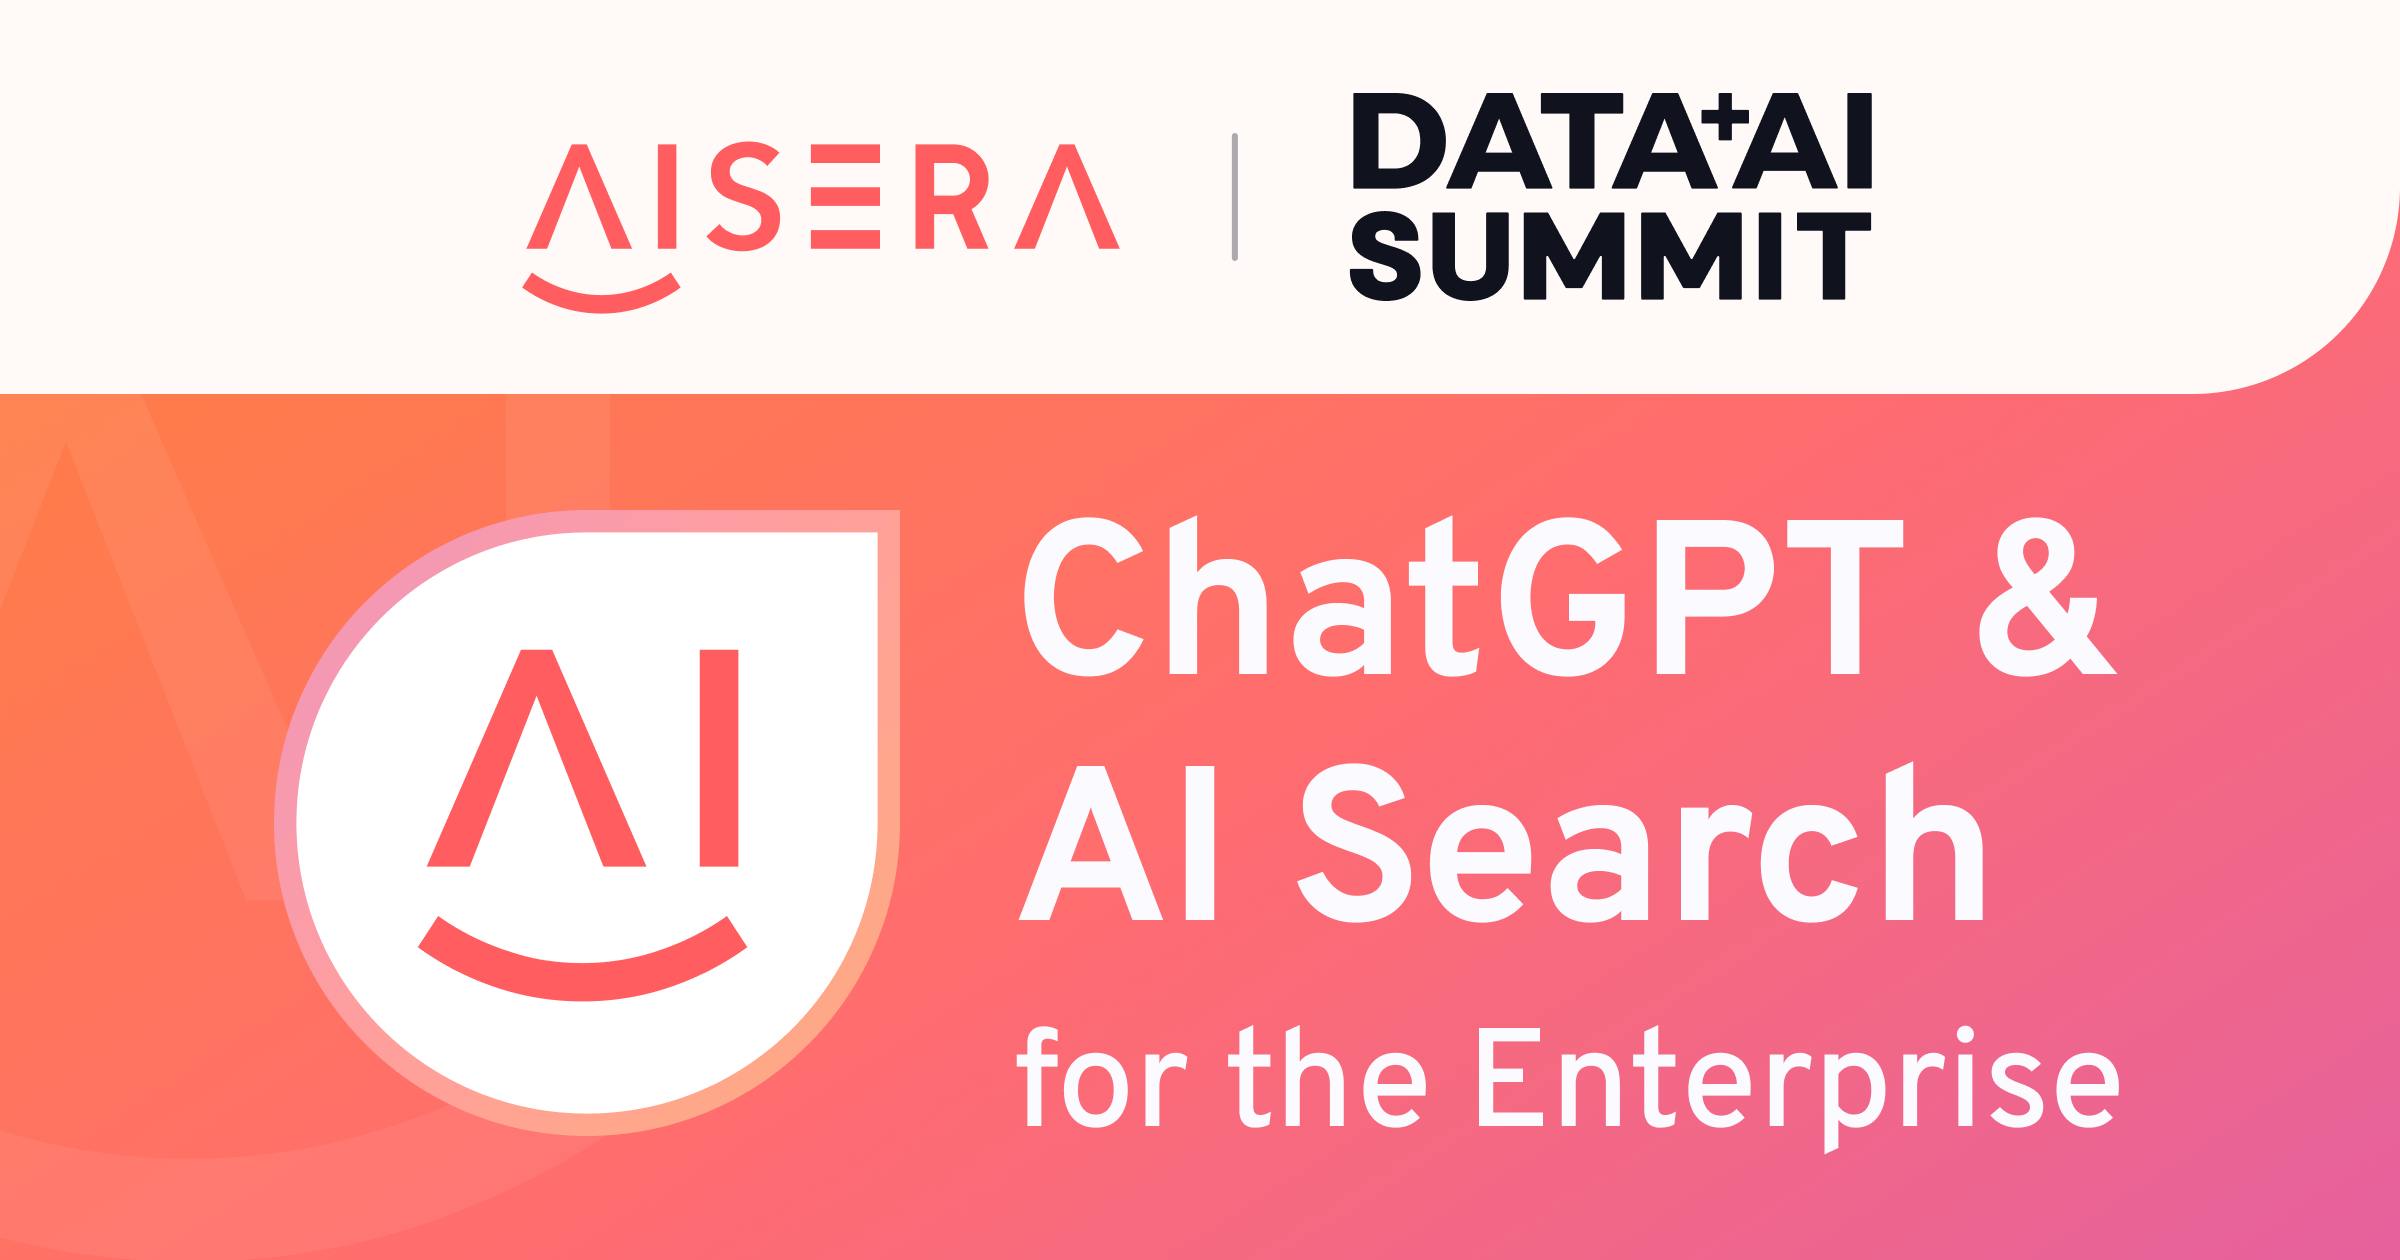 Aisera at Data AI Summit